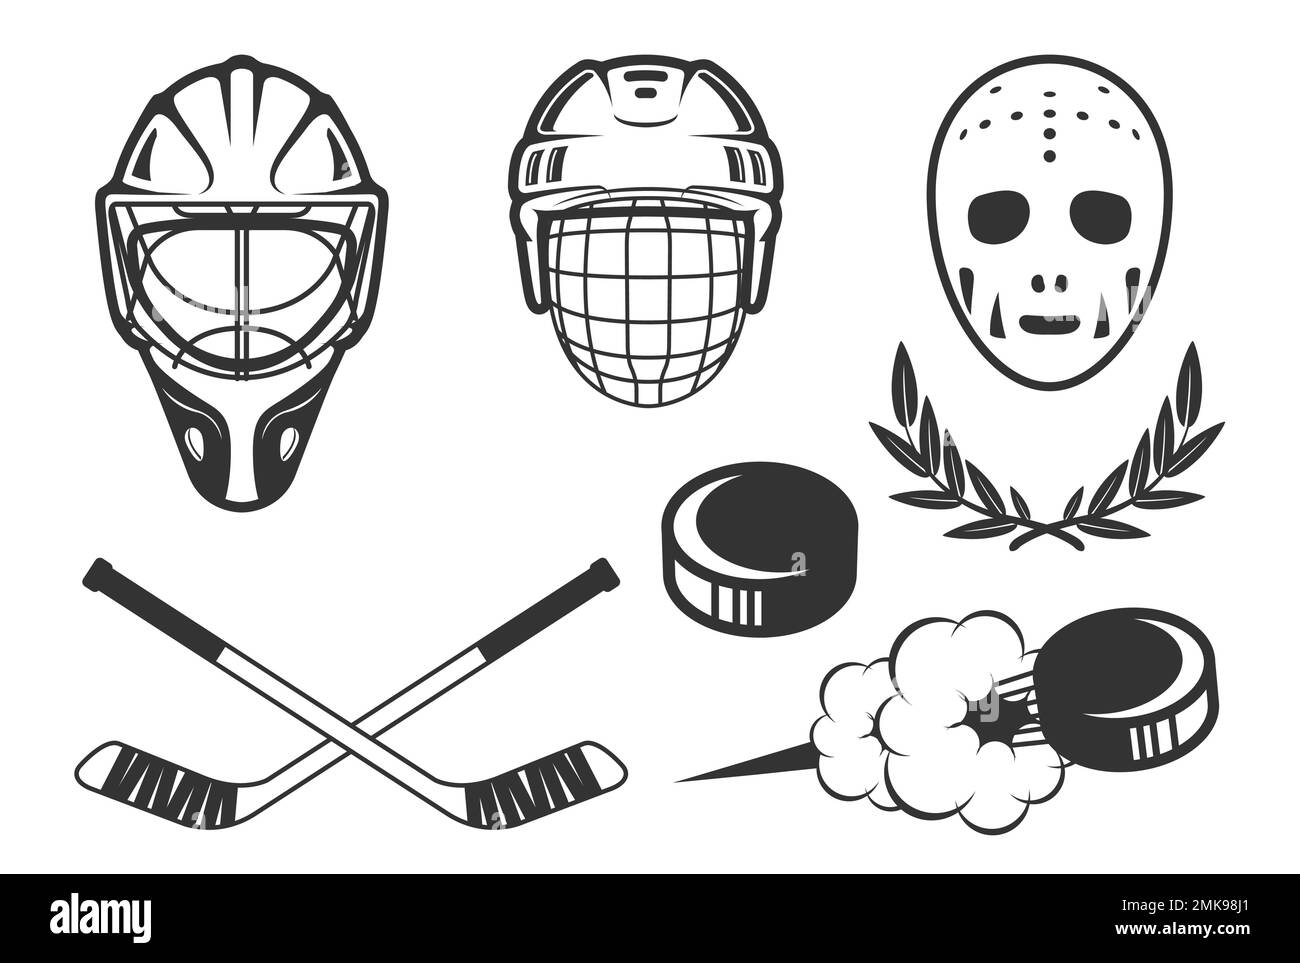 Vintage Hockey Goalie Mask Stock Photo - Download Image Now